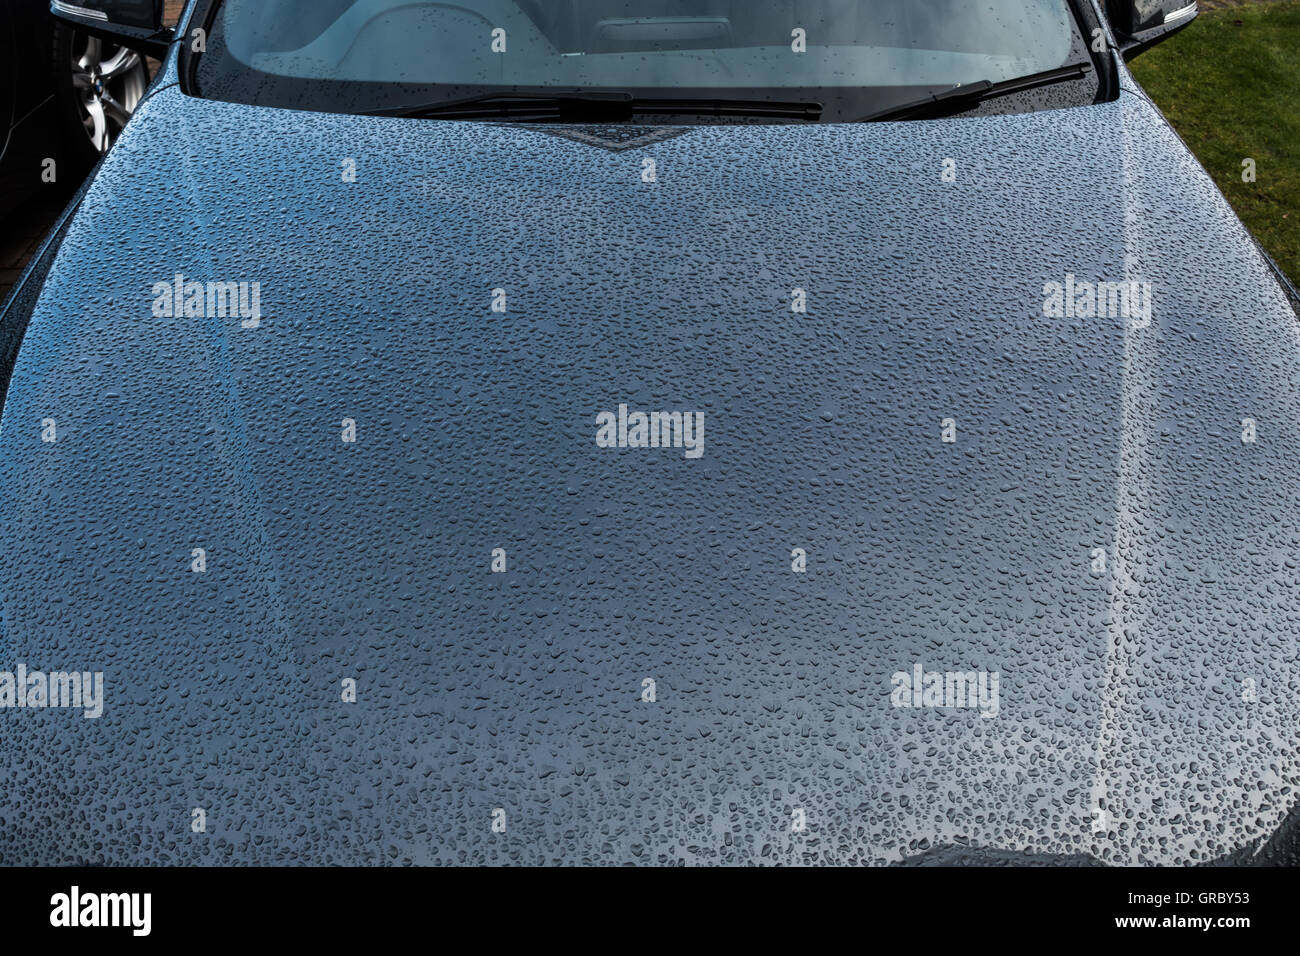 Sicke auf Auto Motorhaube graue Wetter Regenschutz Stockfotografie - Alamy